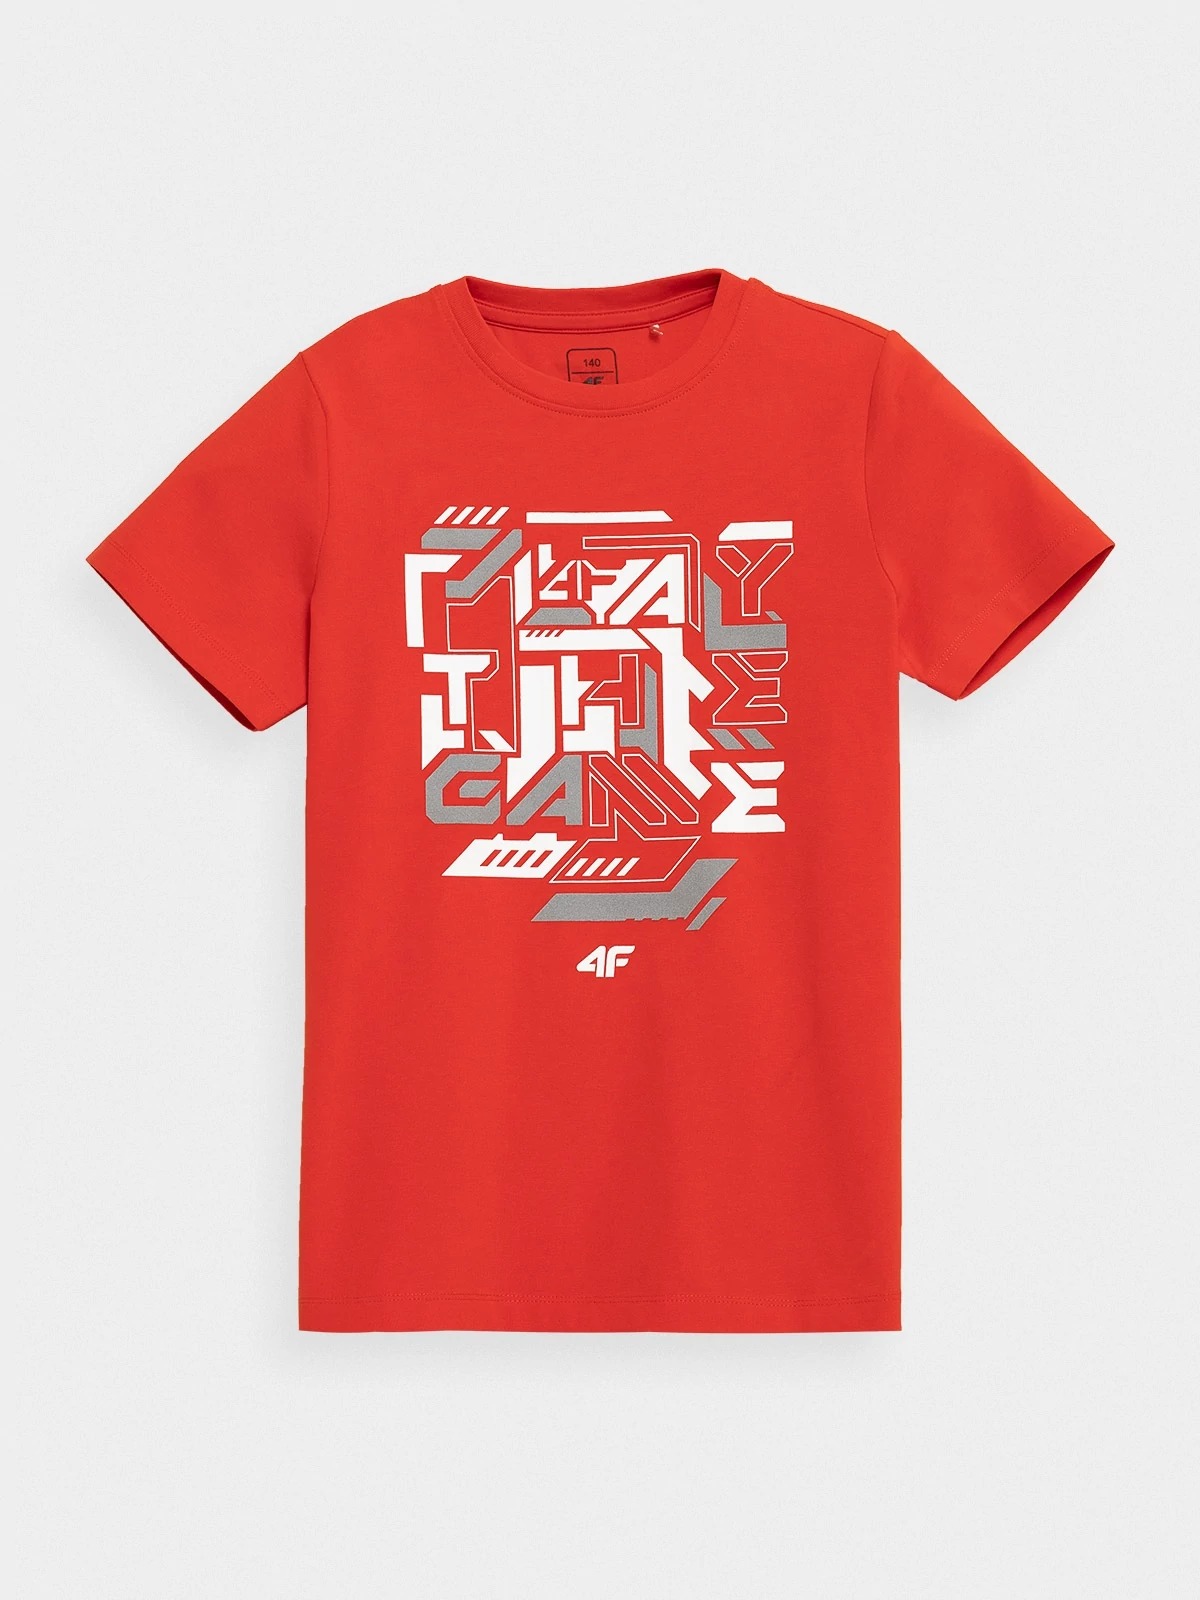 фото Футболка 4f boy's t-shirts hjz21-jtsm006-62s цв.красный р. 122